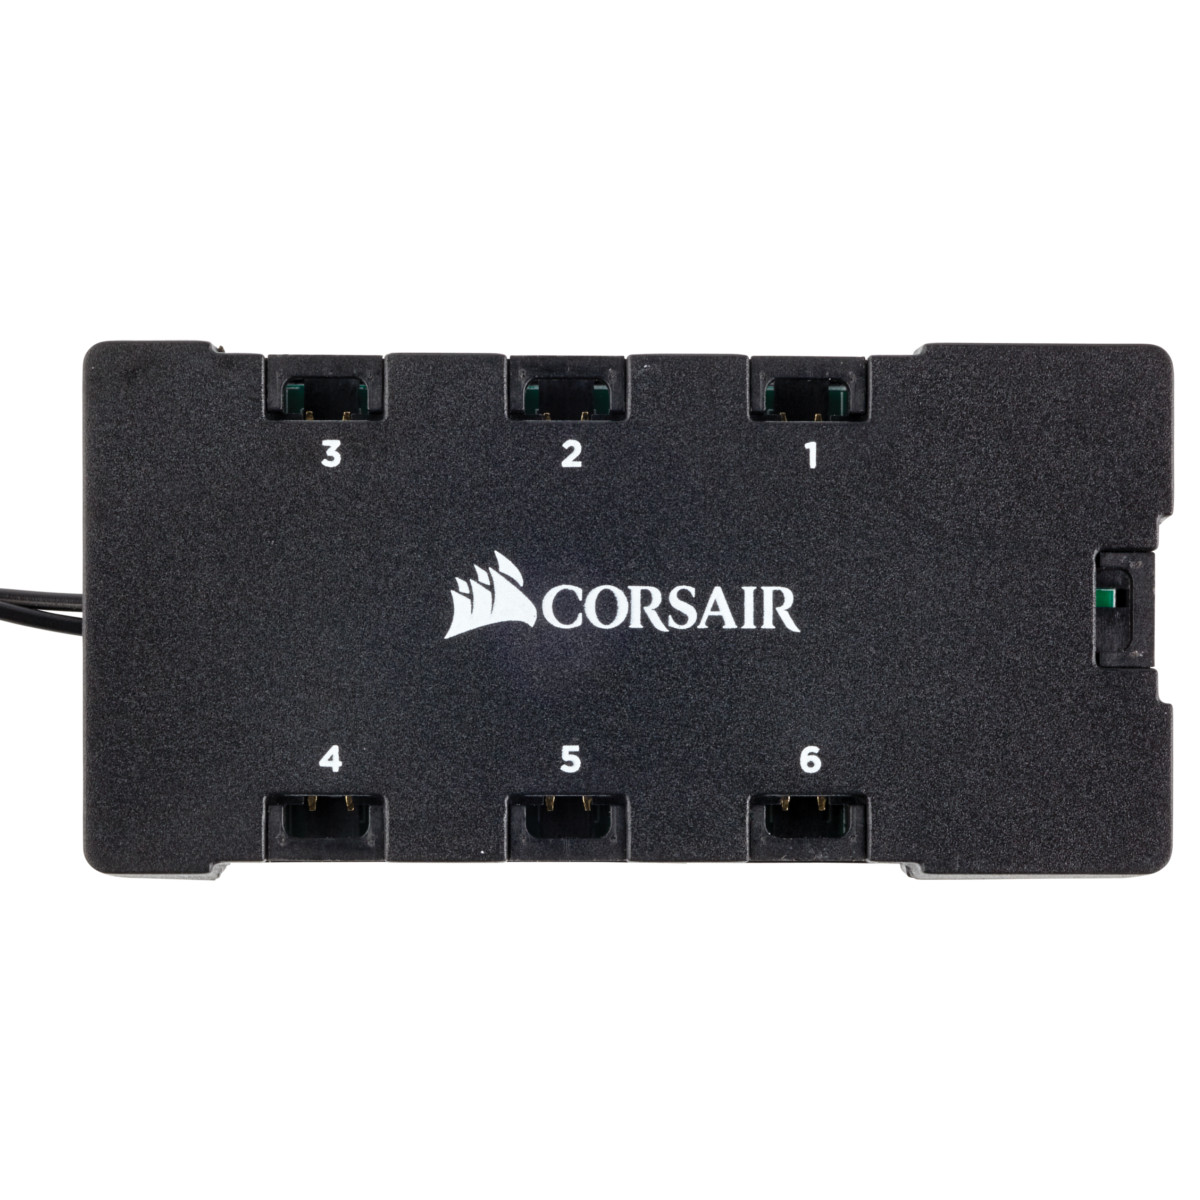 CORSAIR - Corsair LL120 RGB, 120mm Dual Light Loop RGB LED PWM Fan, 3 Fan Pack with Lighting Node  - White